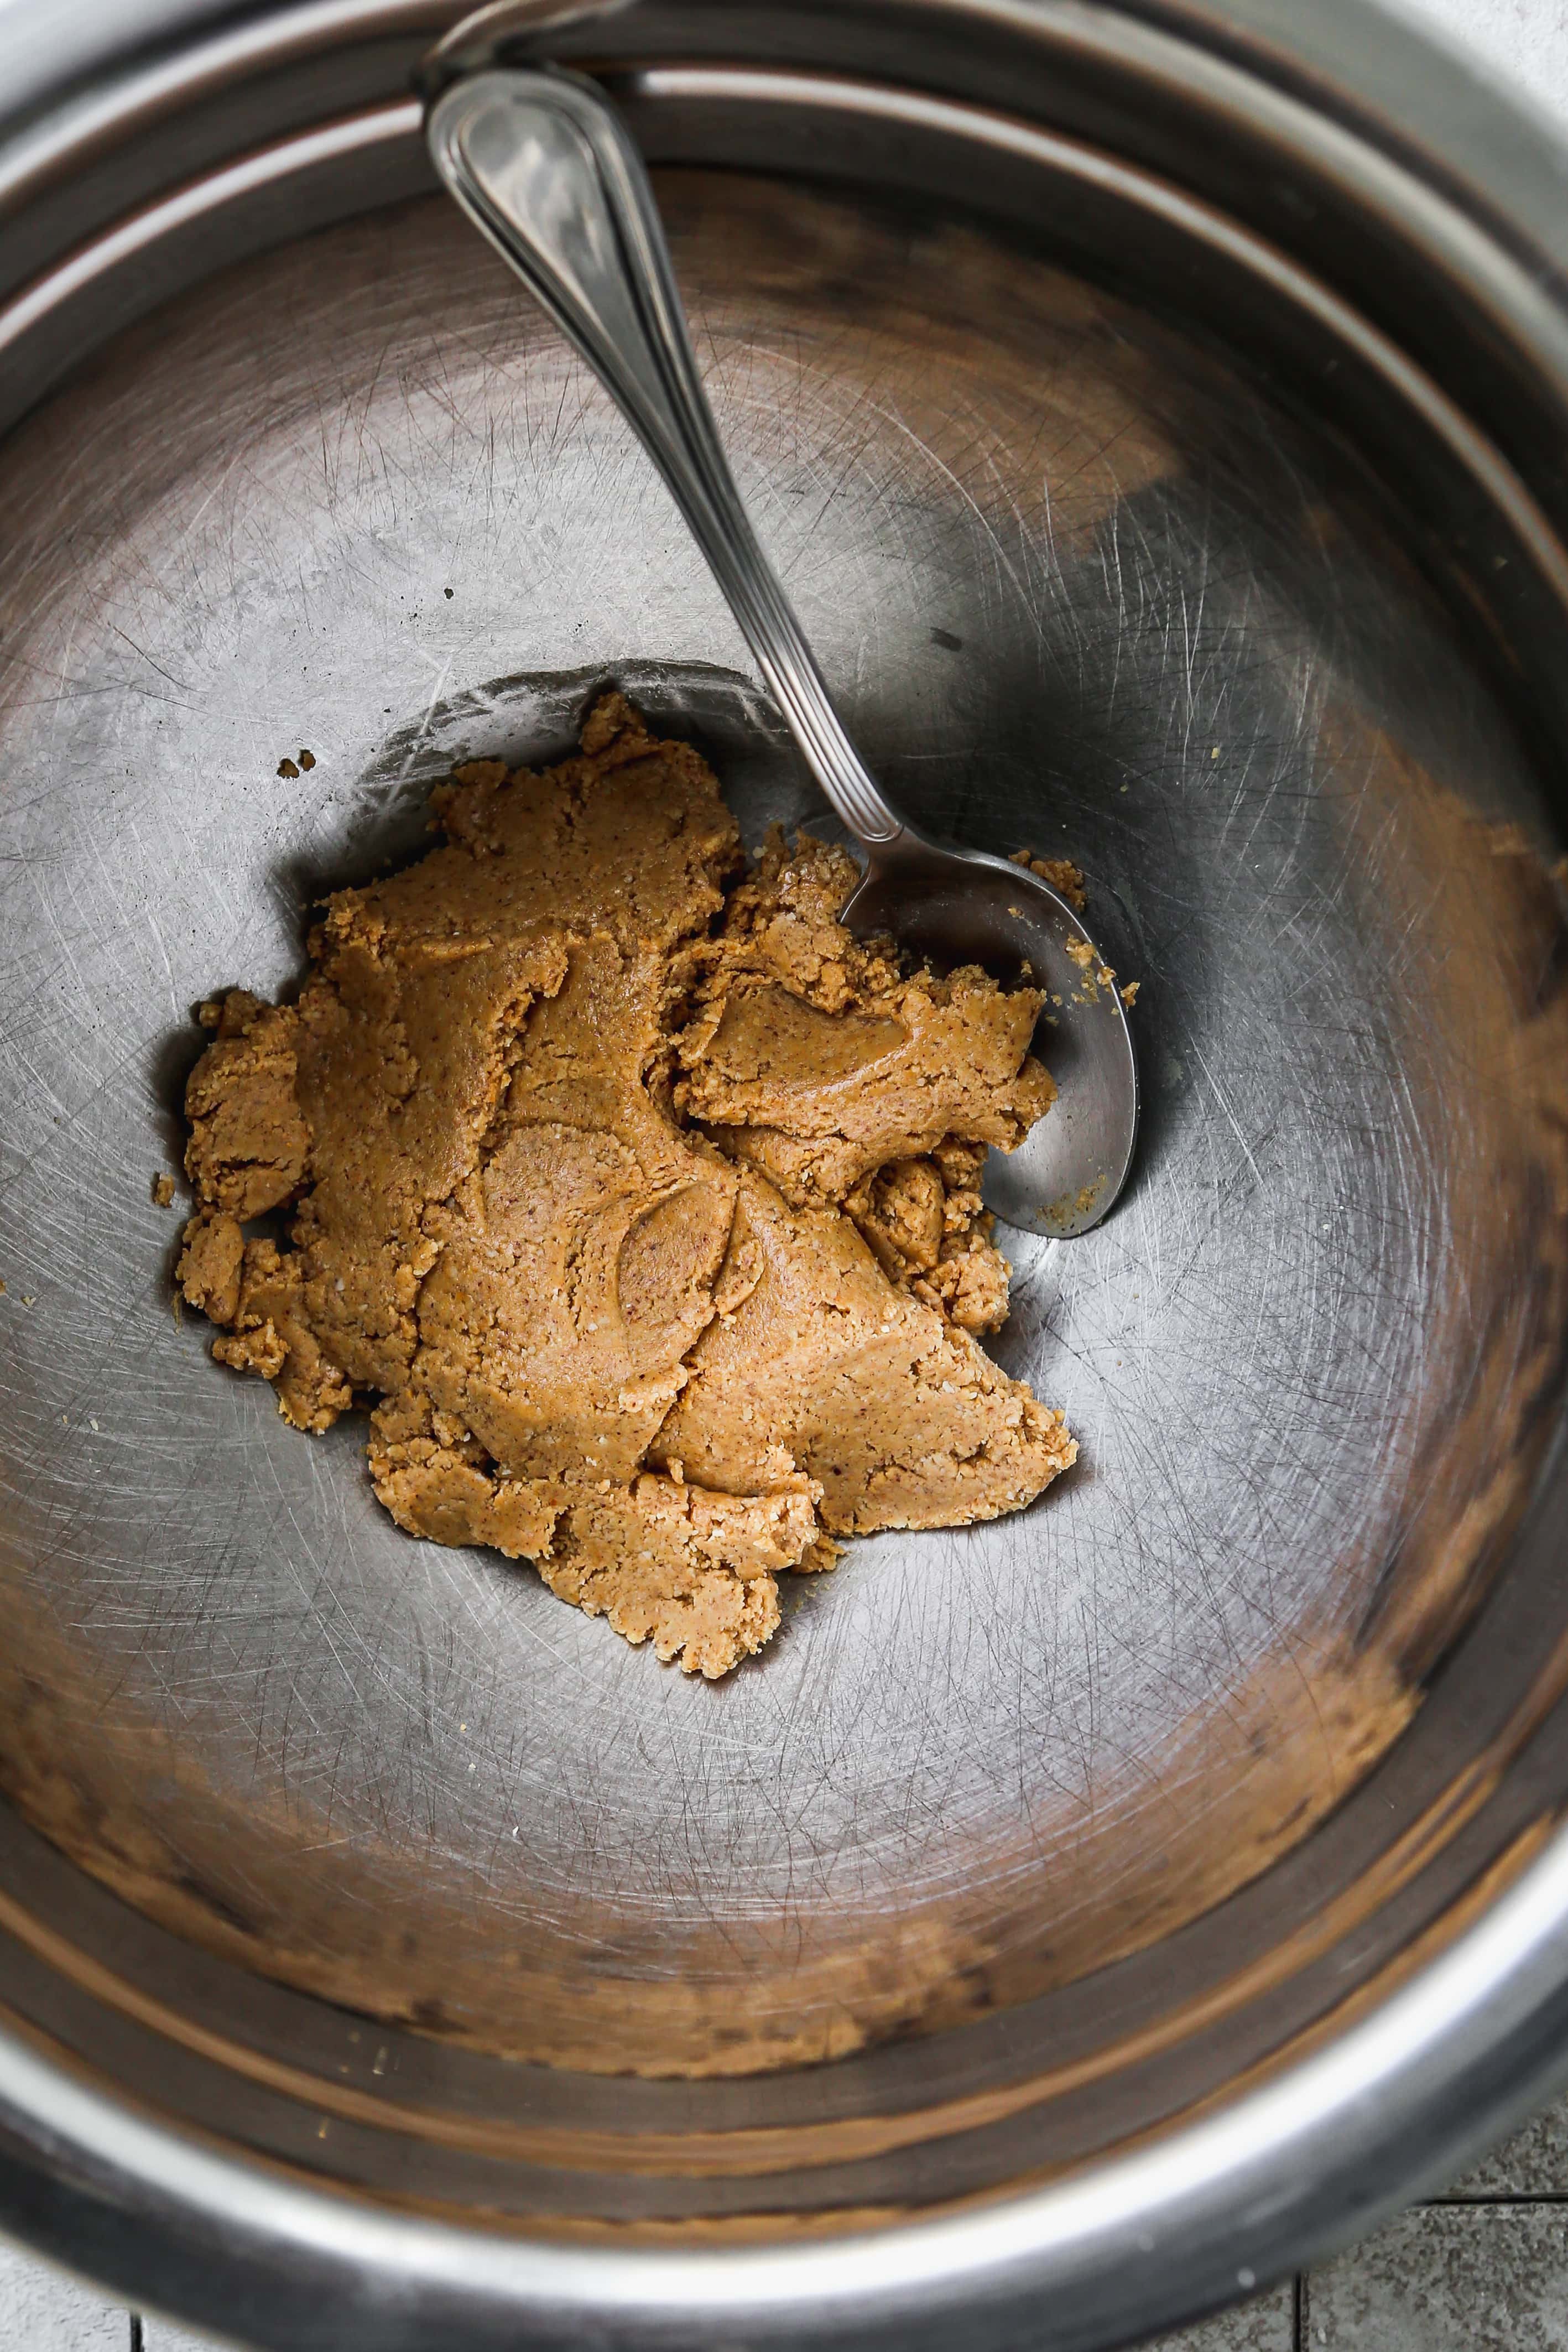 Peanut butter almond flour mixture in a bowl.